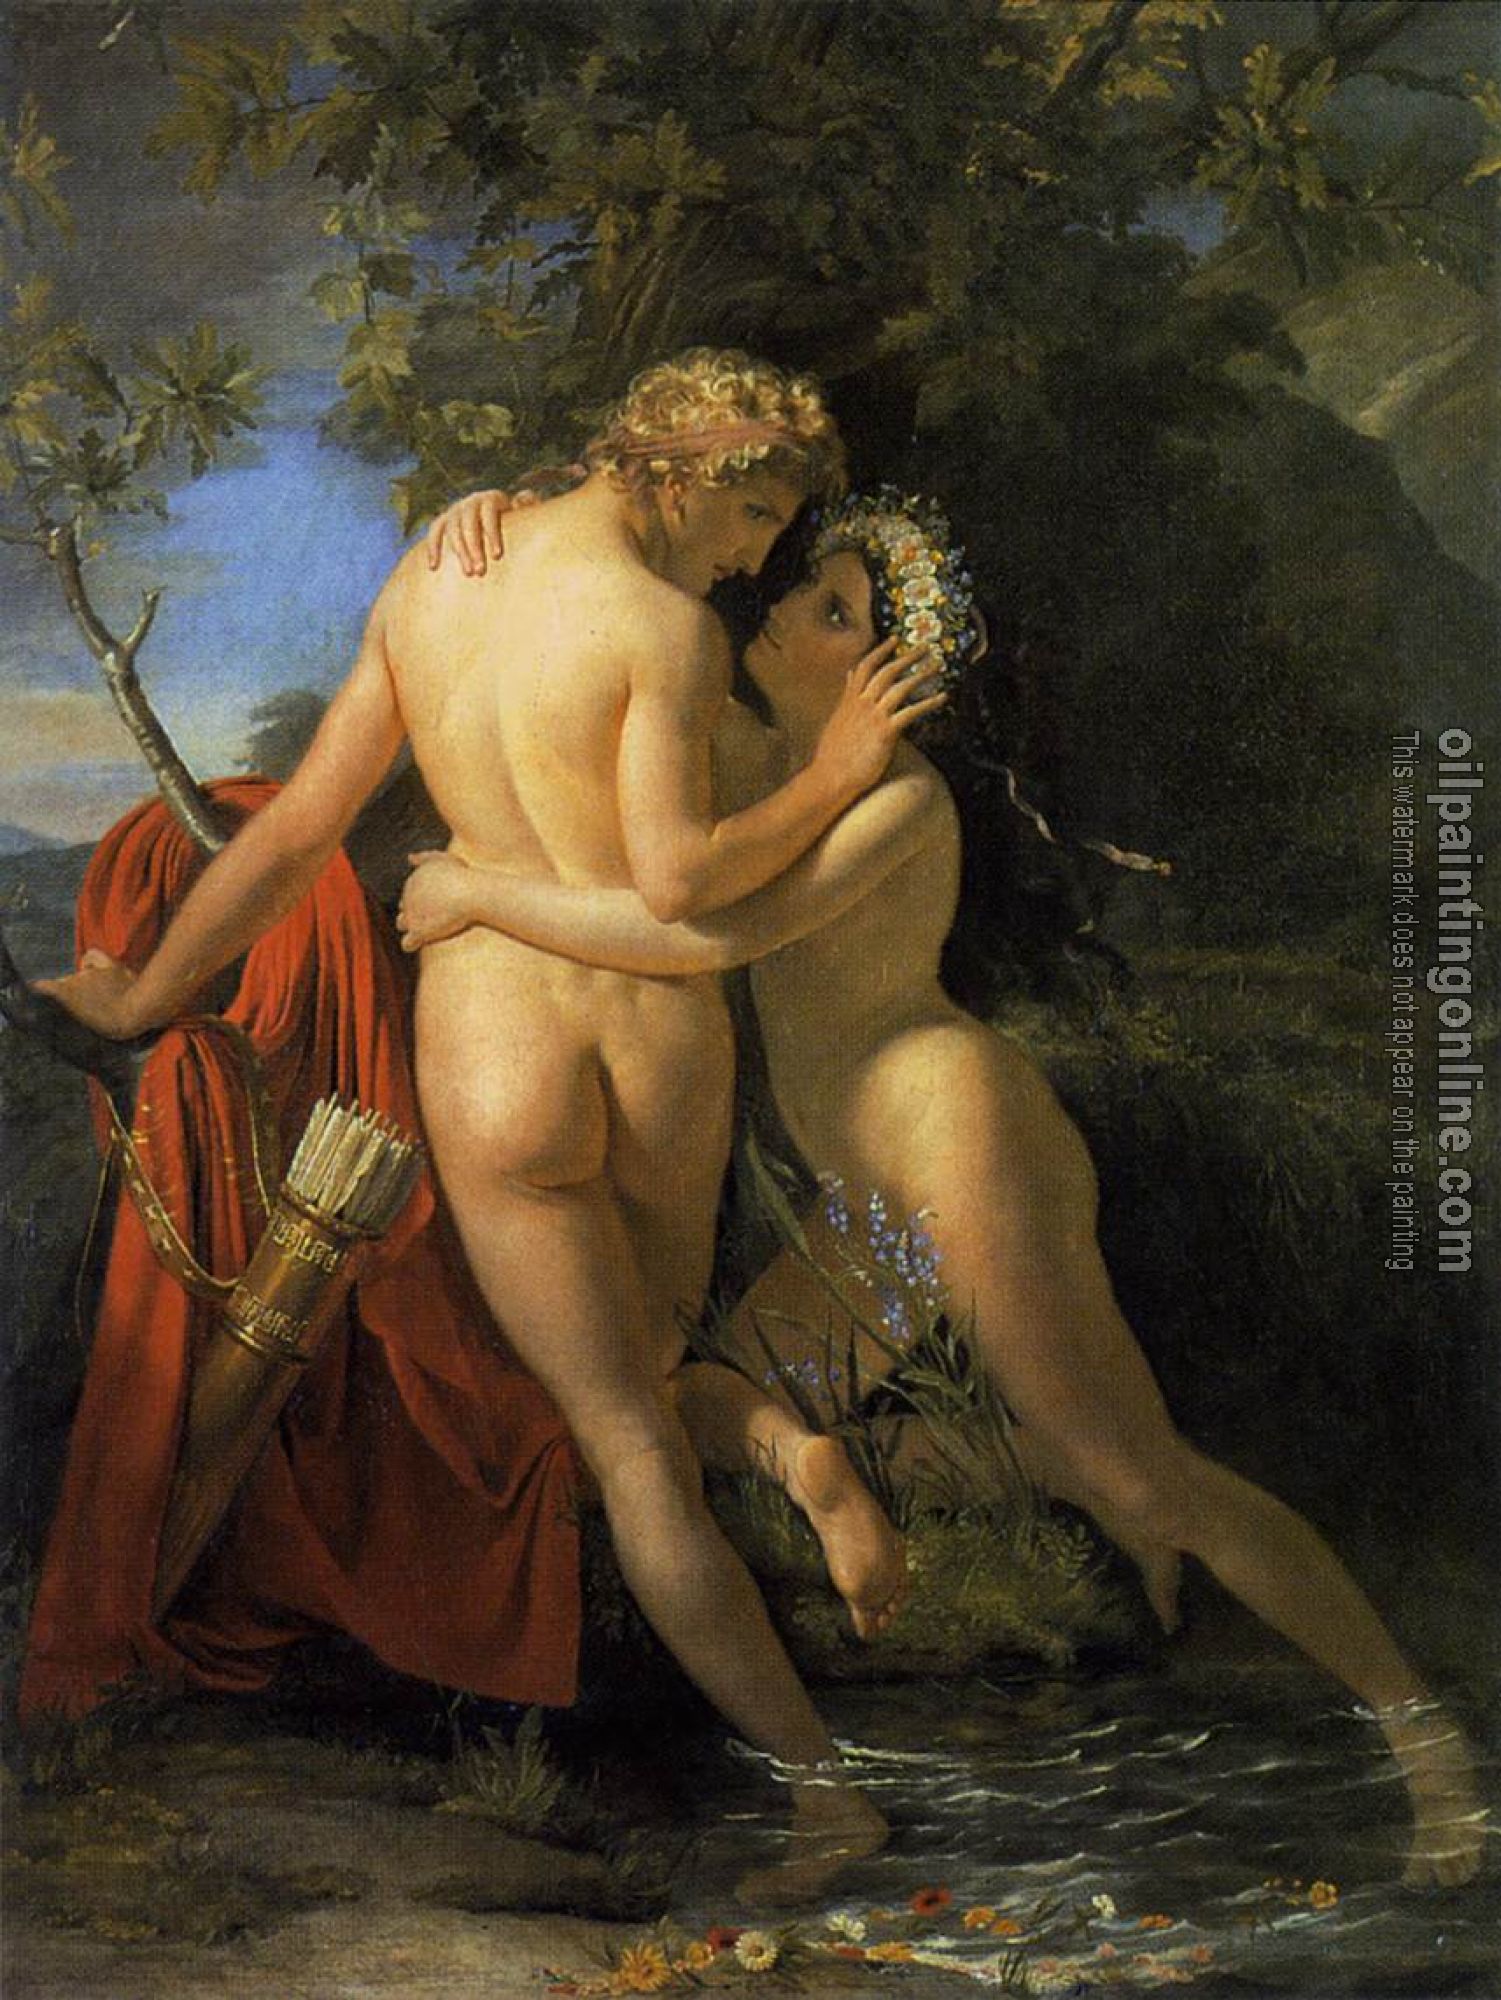 Francois-Joseph Navez - The Nymph Salmacis And Hermaphroditus